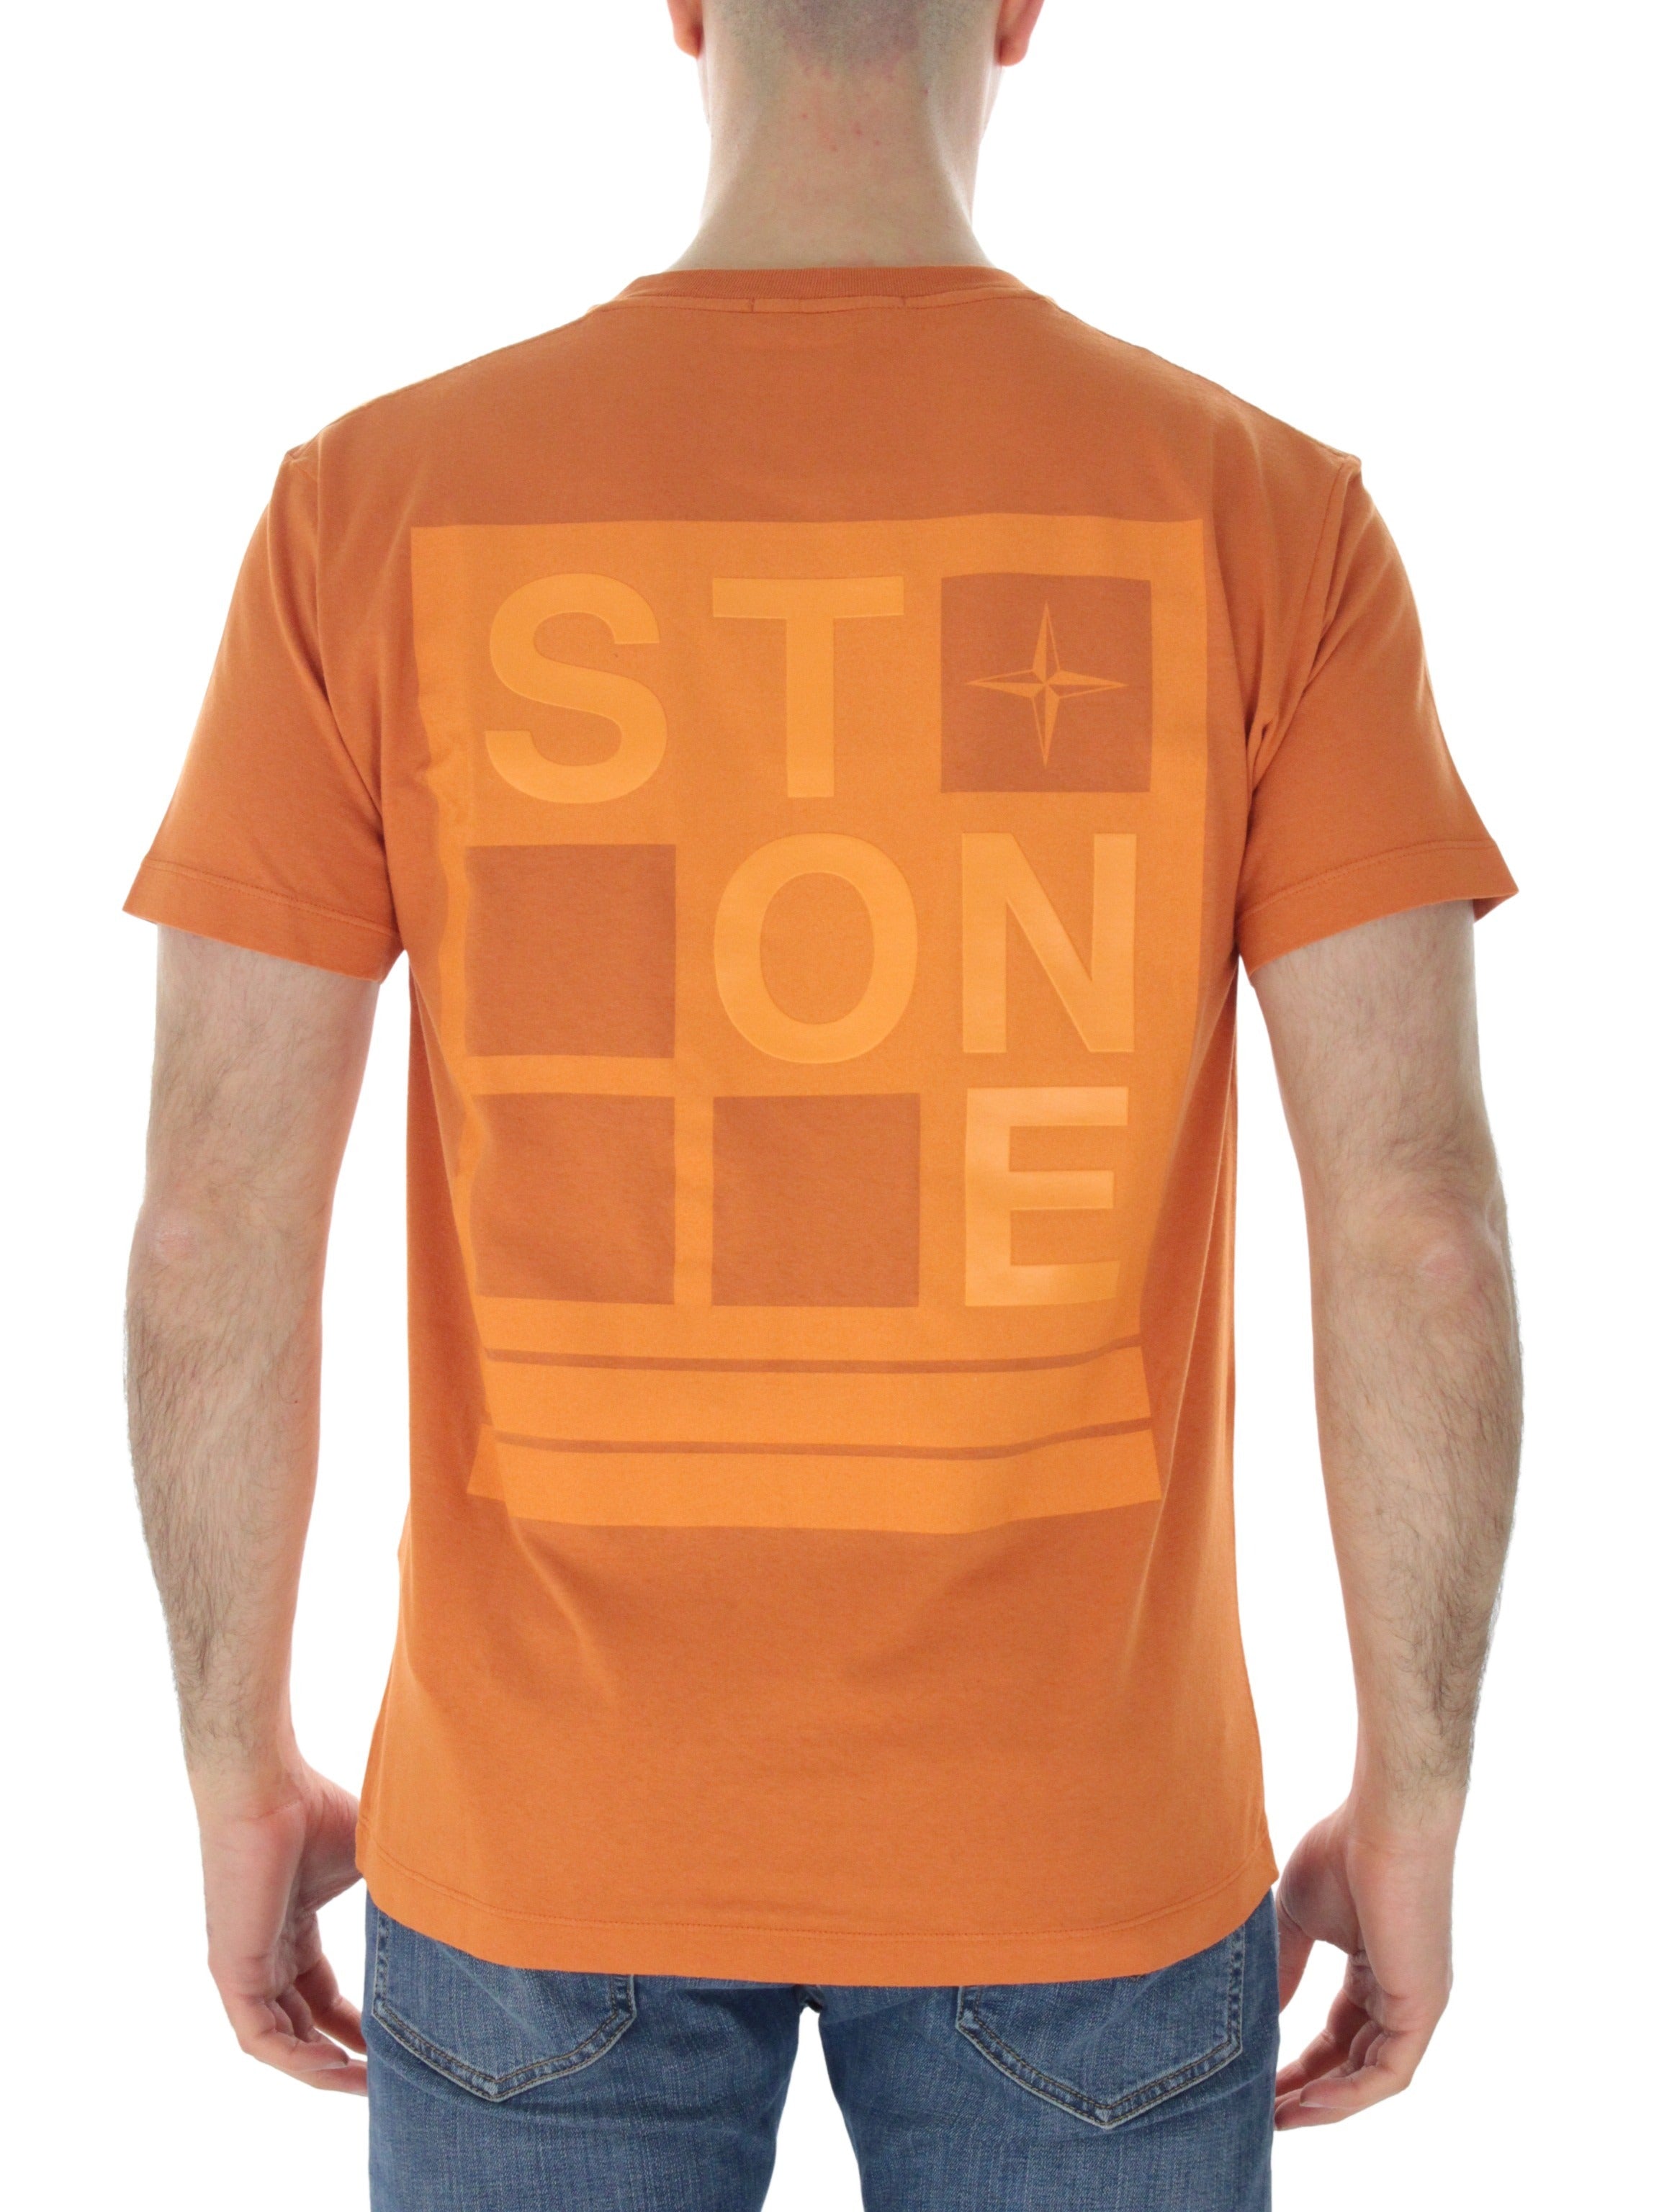 Stone island t-shirt arancio